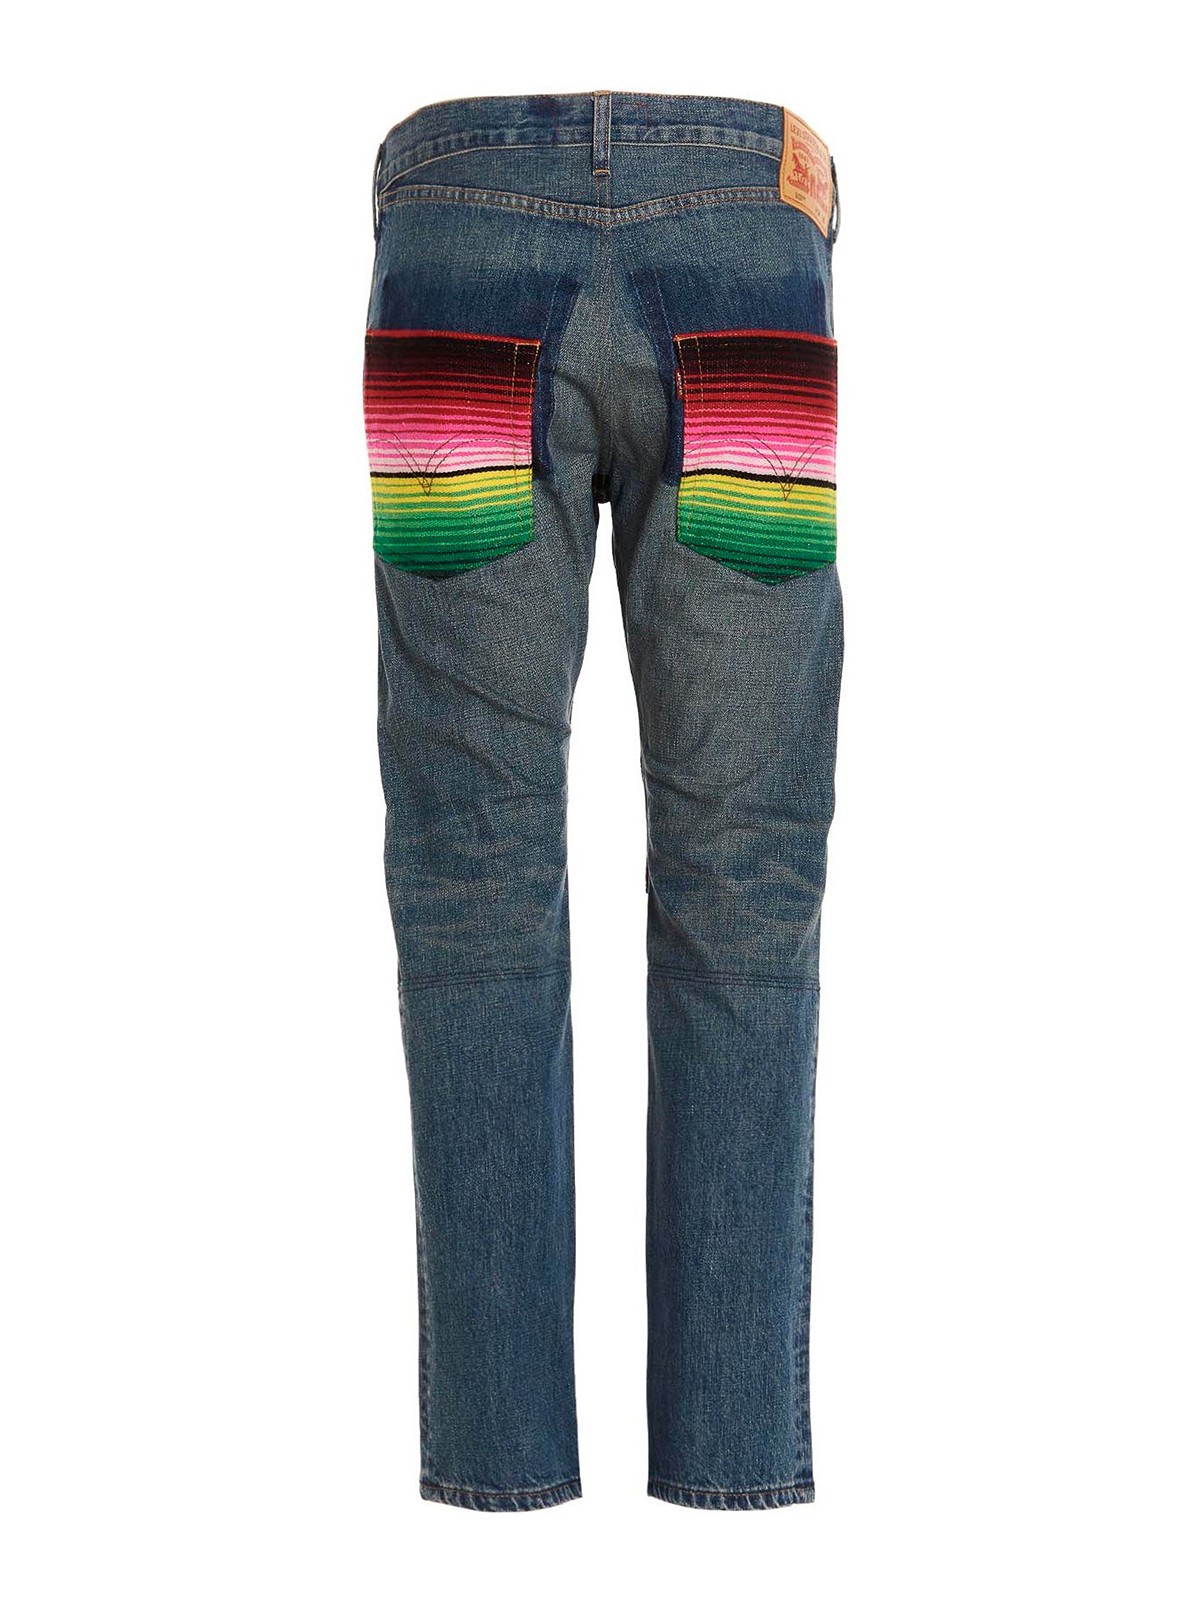 Straight leg jeans Junya Watanabe - Junya Watanabe x Levi's jeans -  WJP2030511